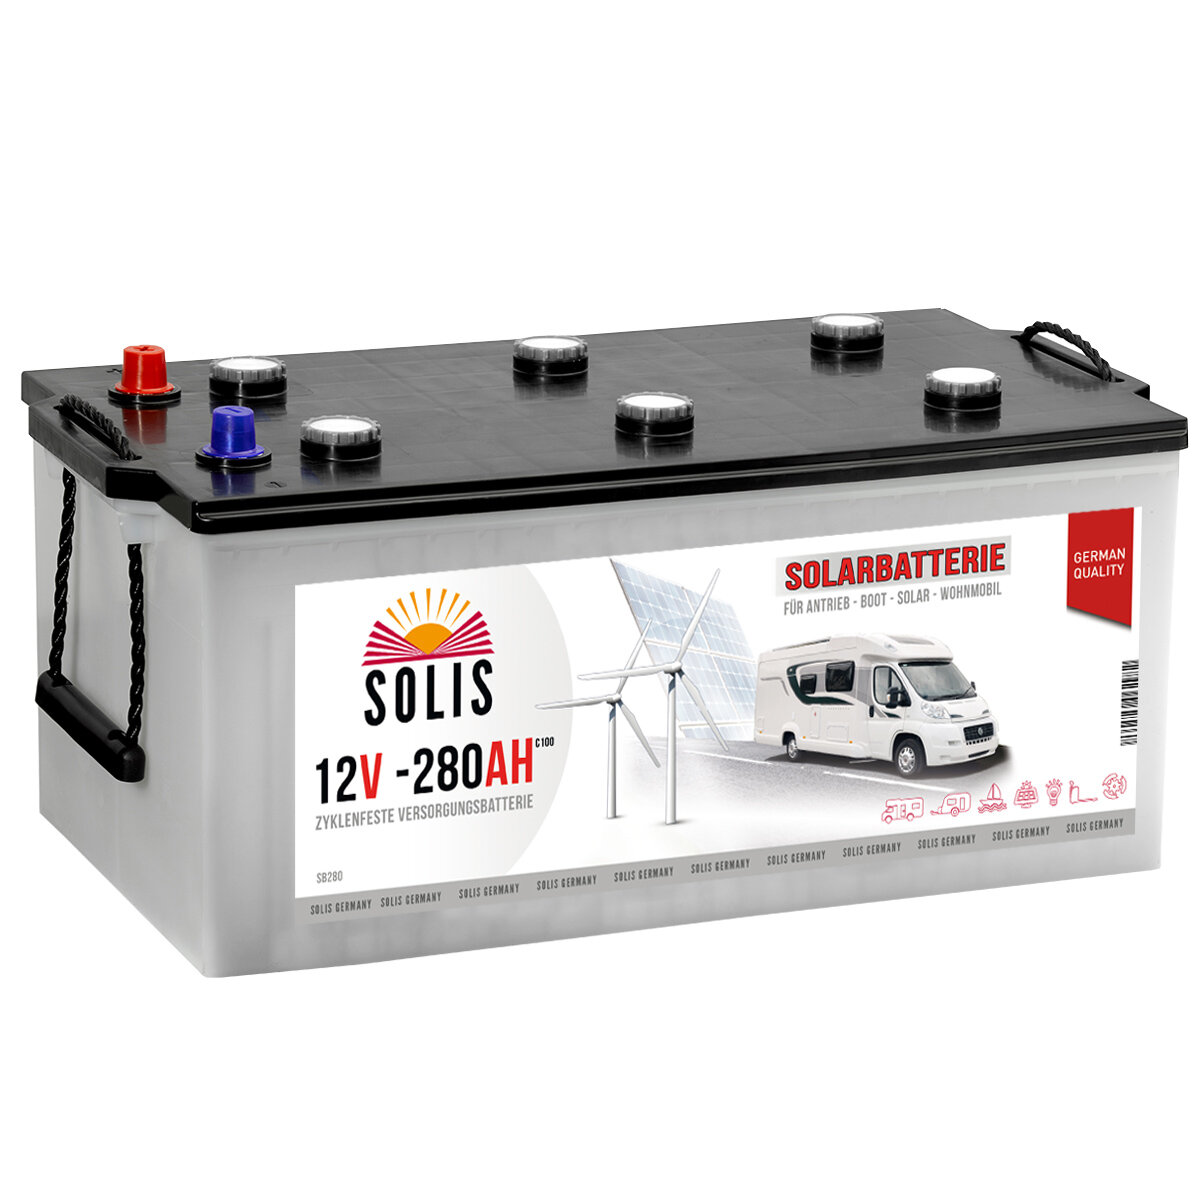 Solis Solarbatterie 280Ah 12V, 278,91 €